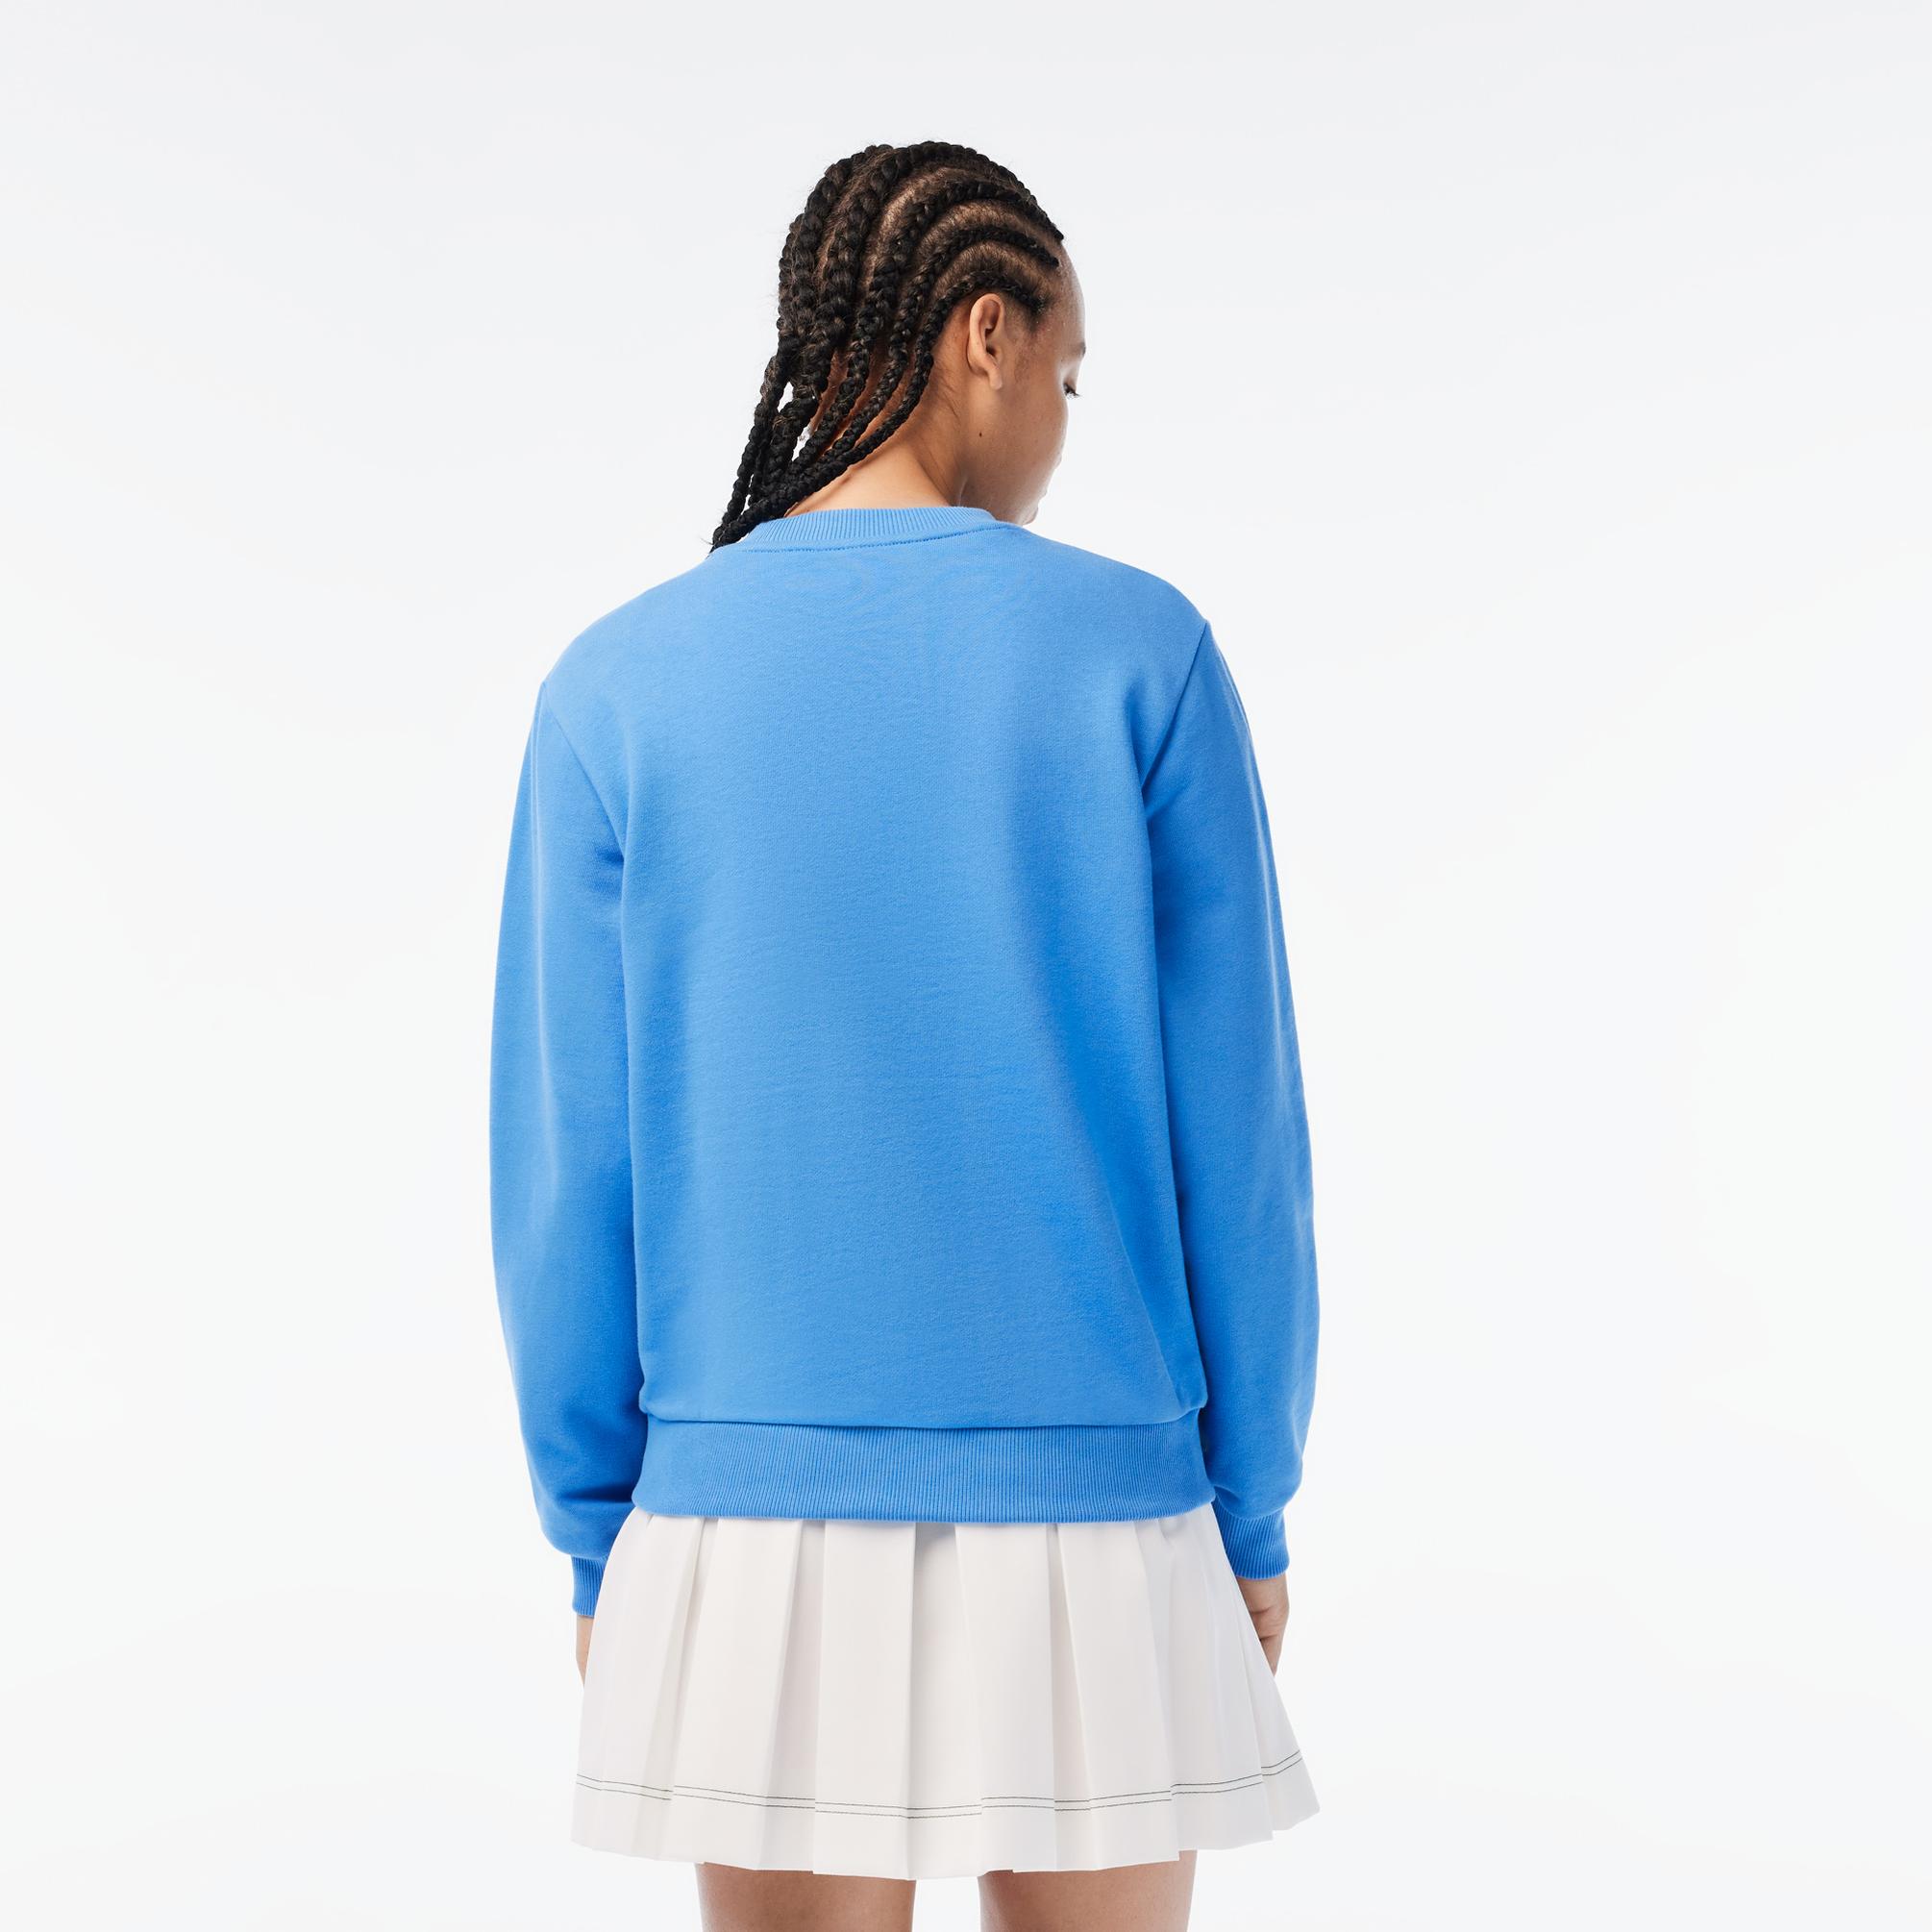  Lacoste x Netflix Kadın Mavi Sweatshirt